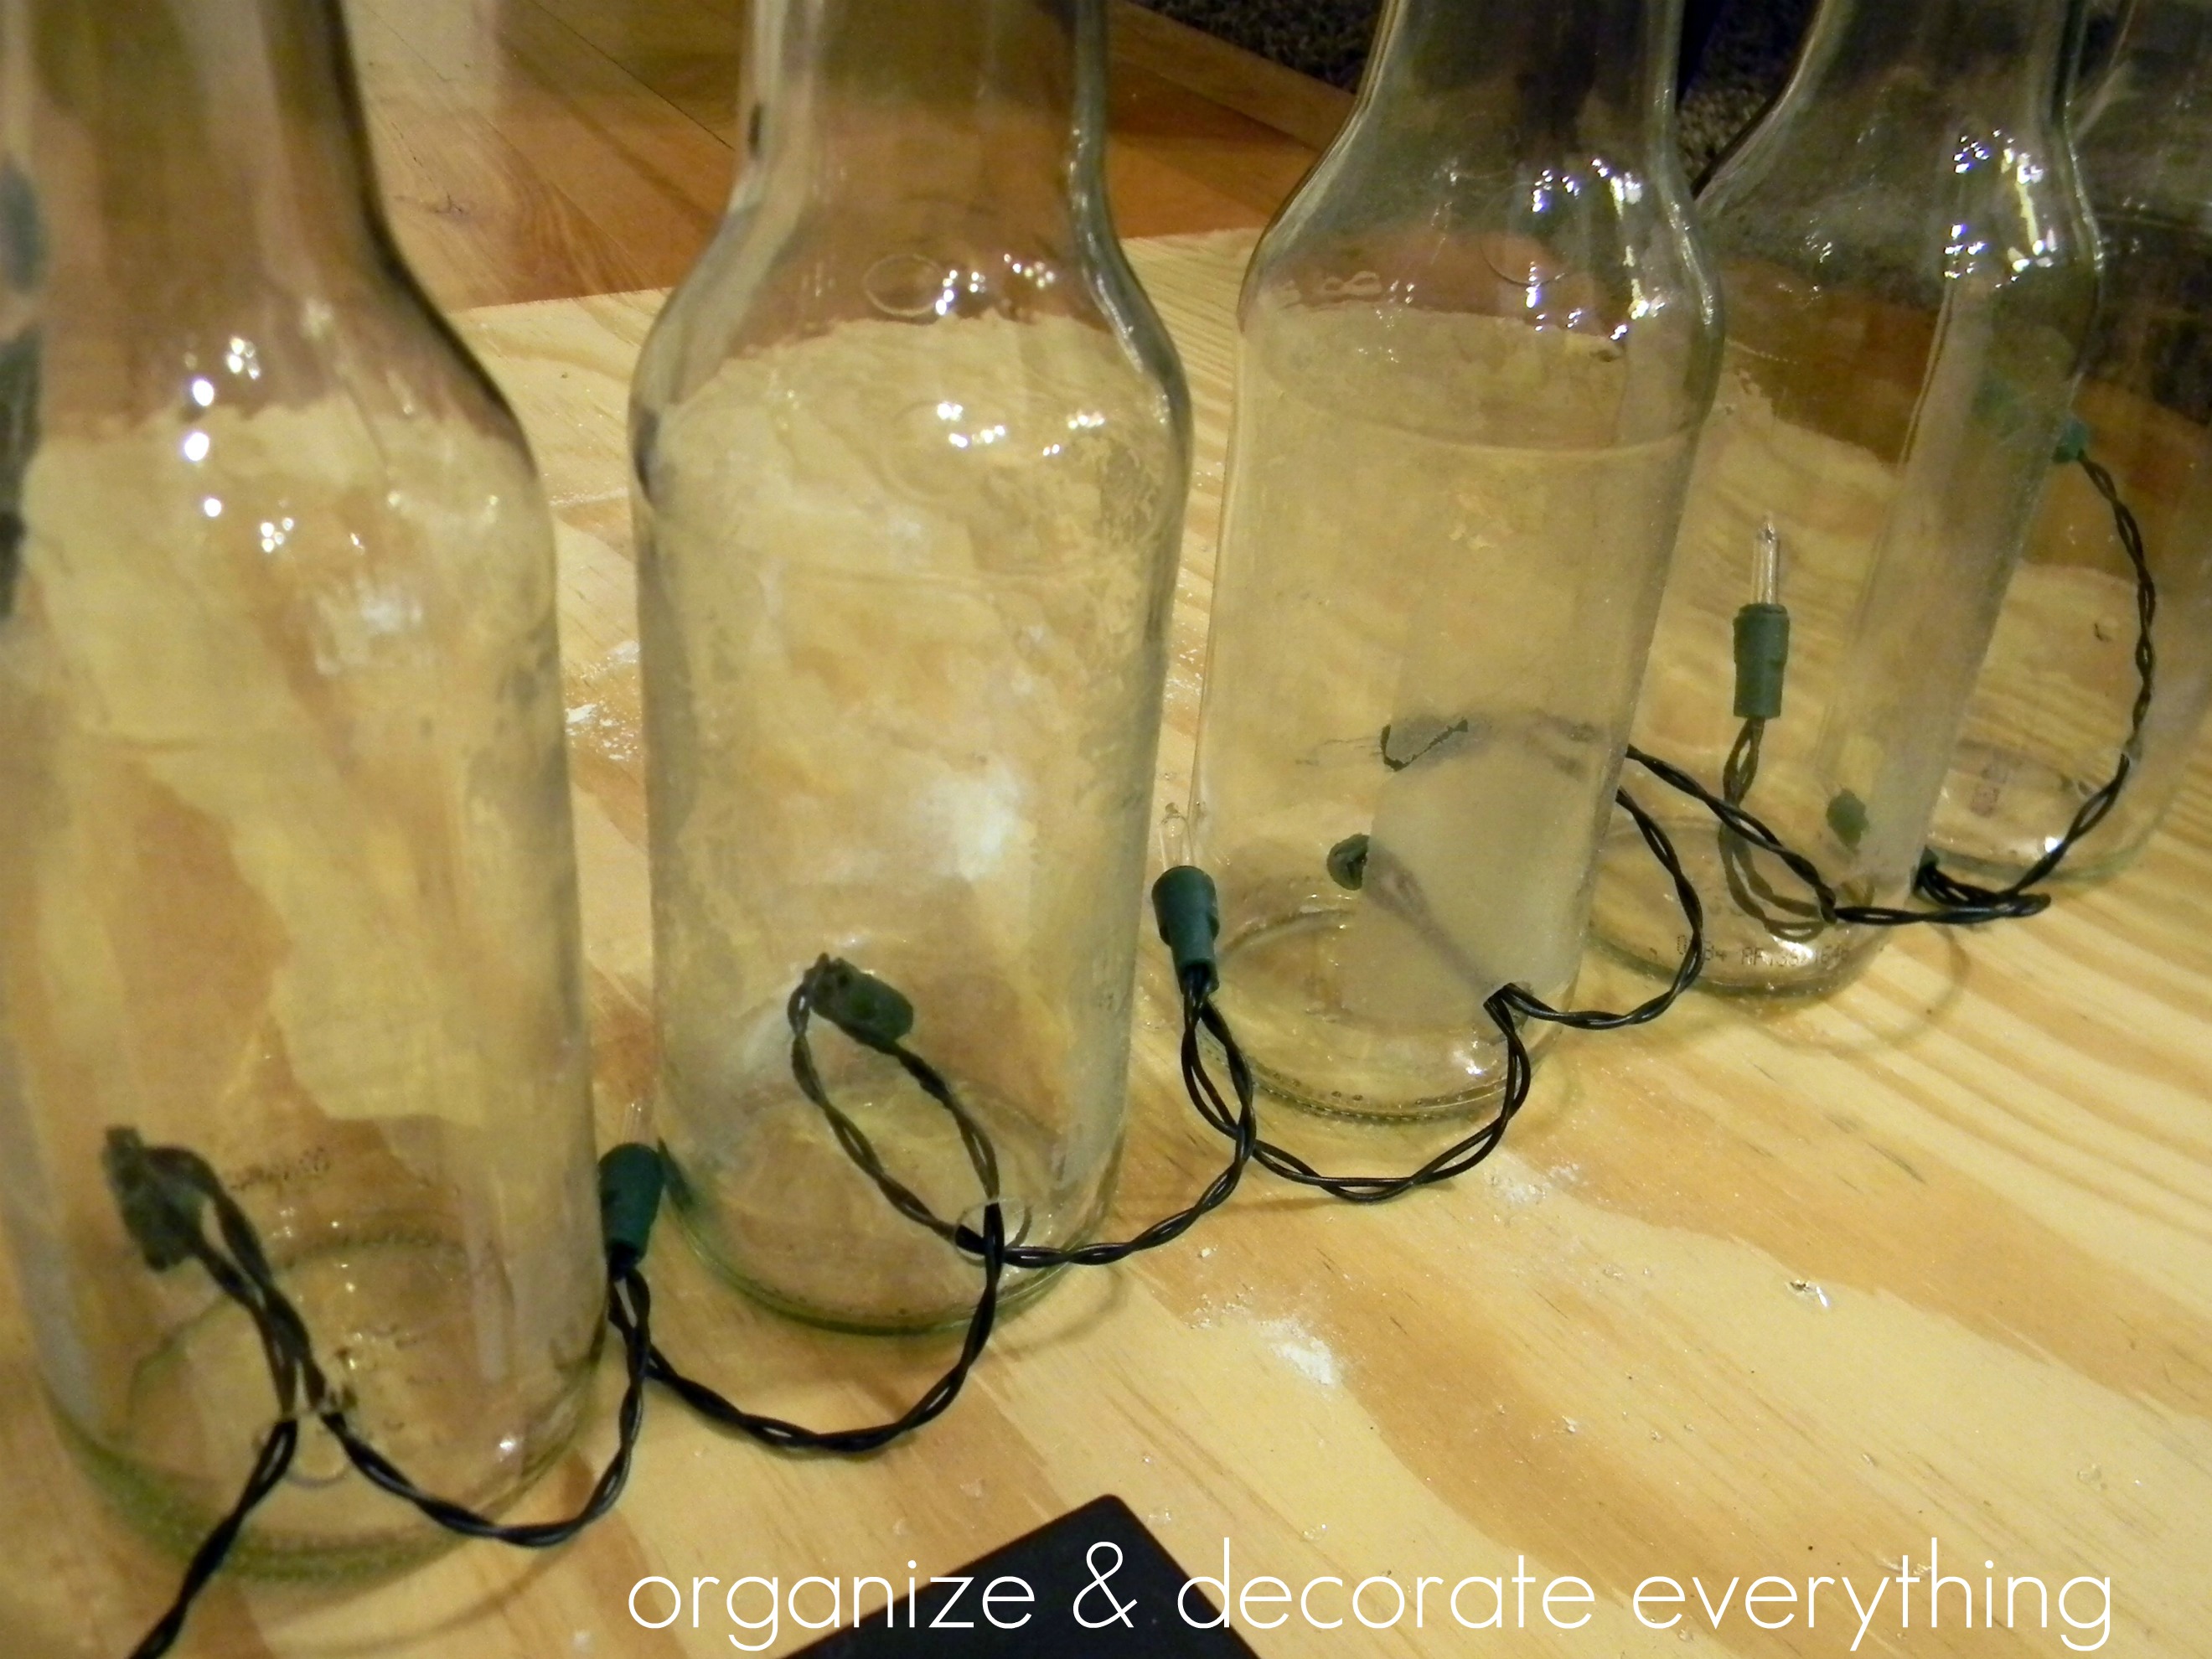 Alternate Way to Drill Glass Bottles